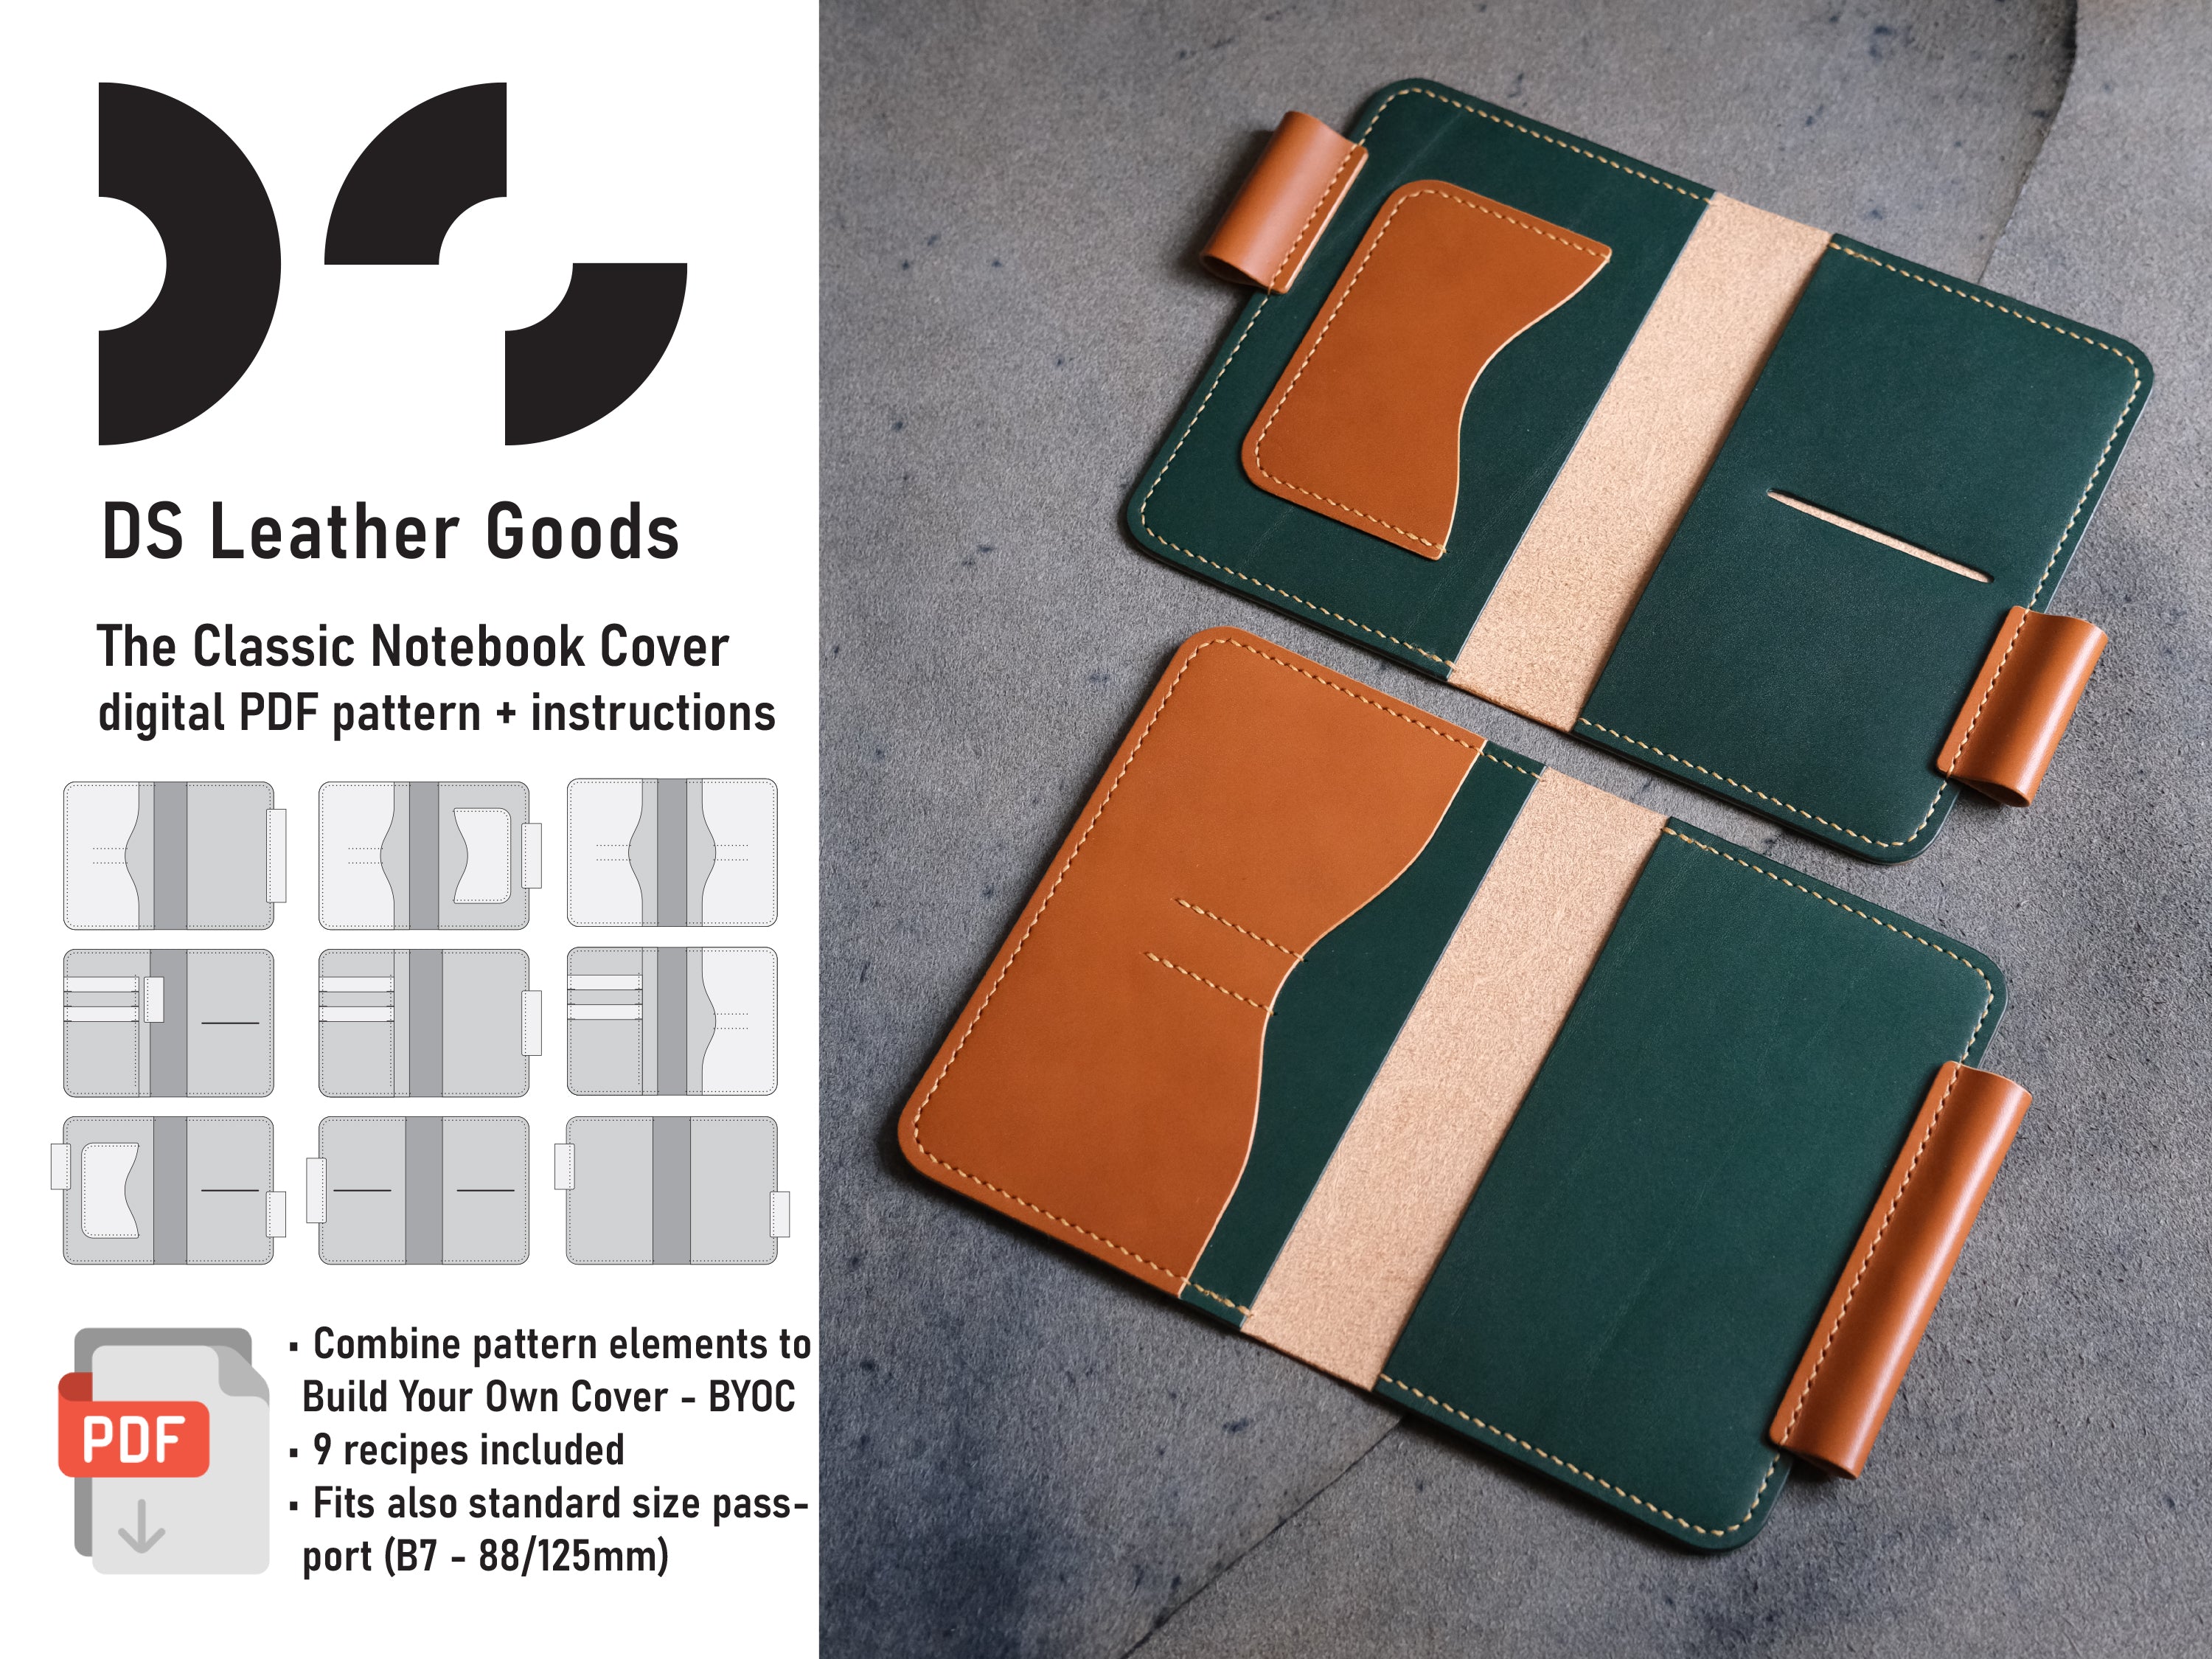 Hermes, leather bag pattern, leather pattern, leather patterns,  leathercraft pattern, leather craft pattern, pdf, download